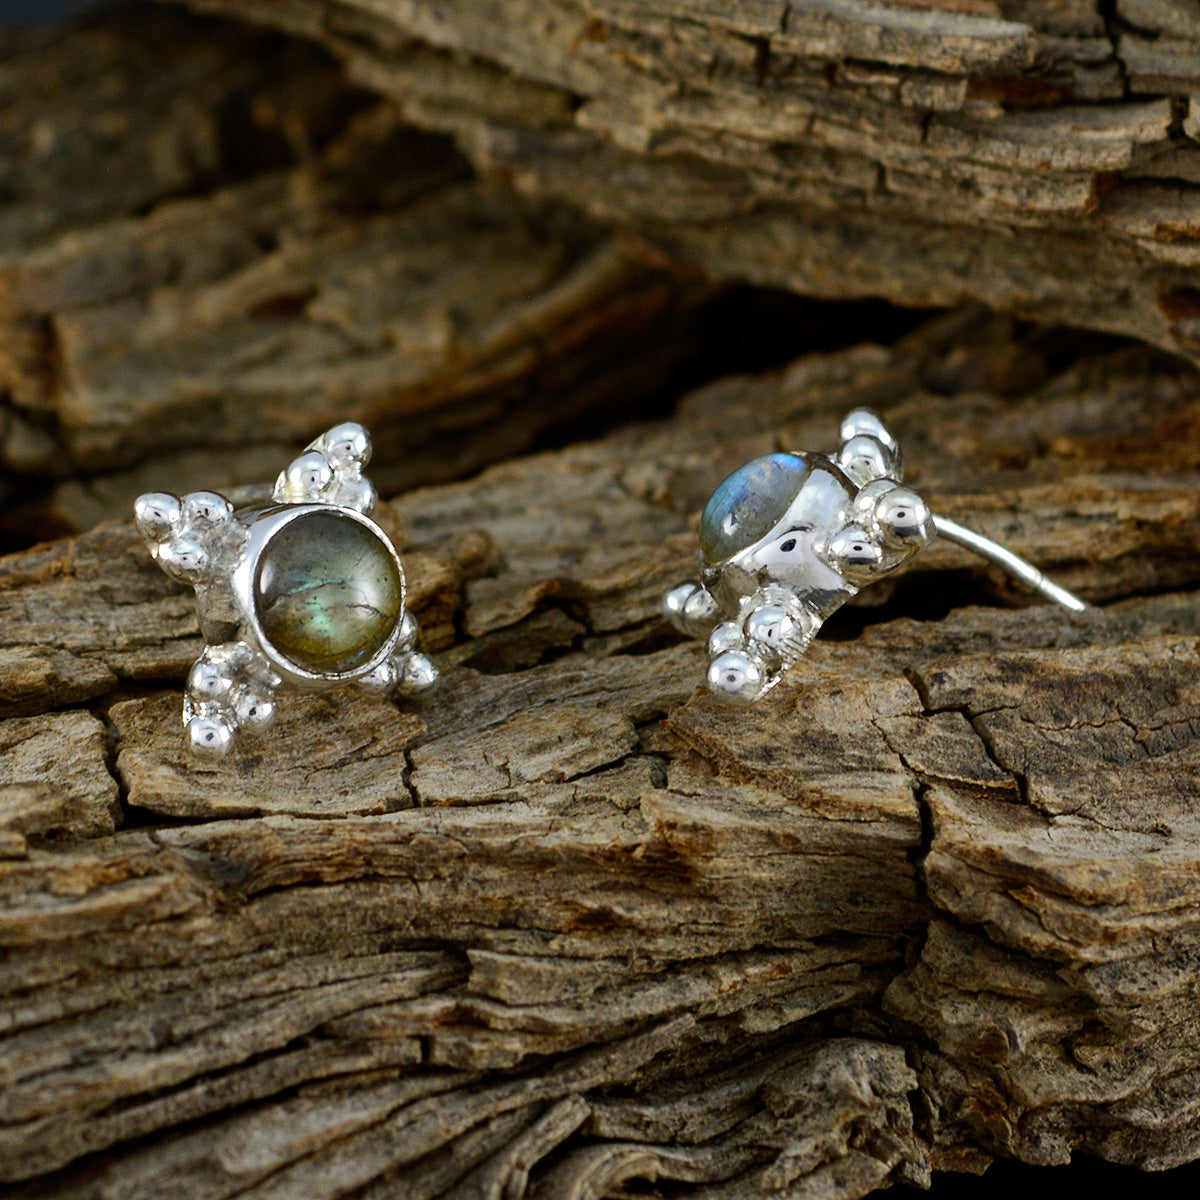 Riyo Genuine Gems round Faceted Grey Labradorite Silver Earrings gift for friend